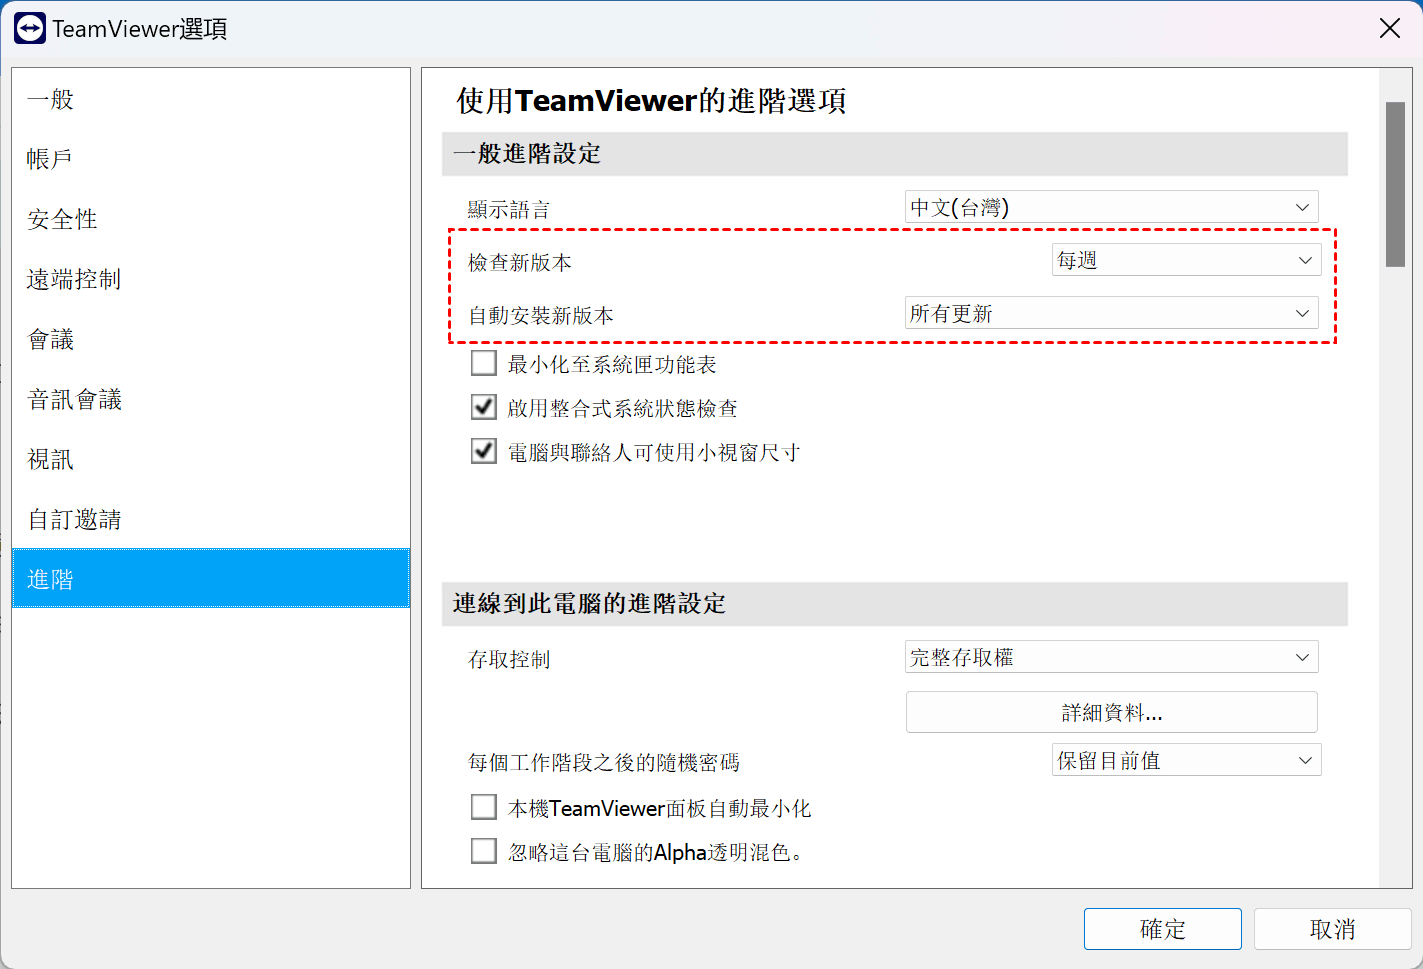 teamviewer-update-set